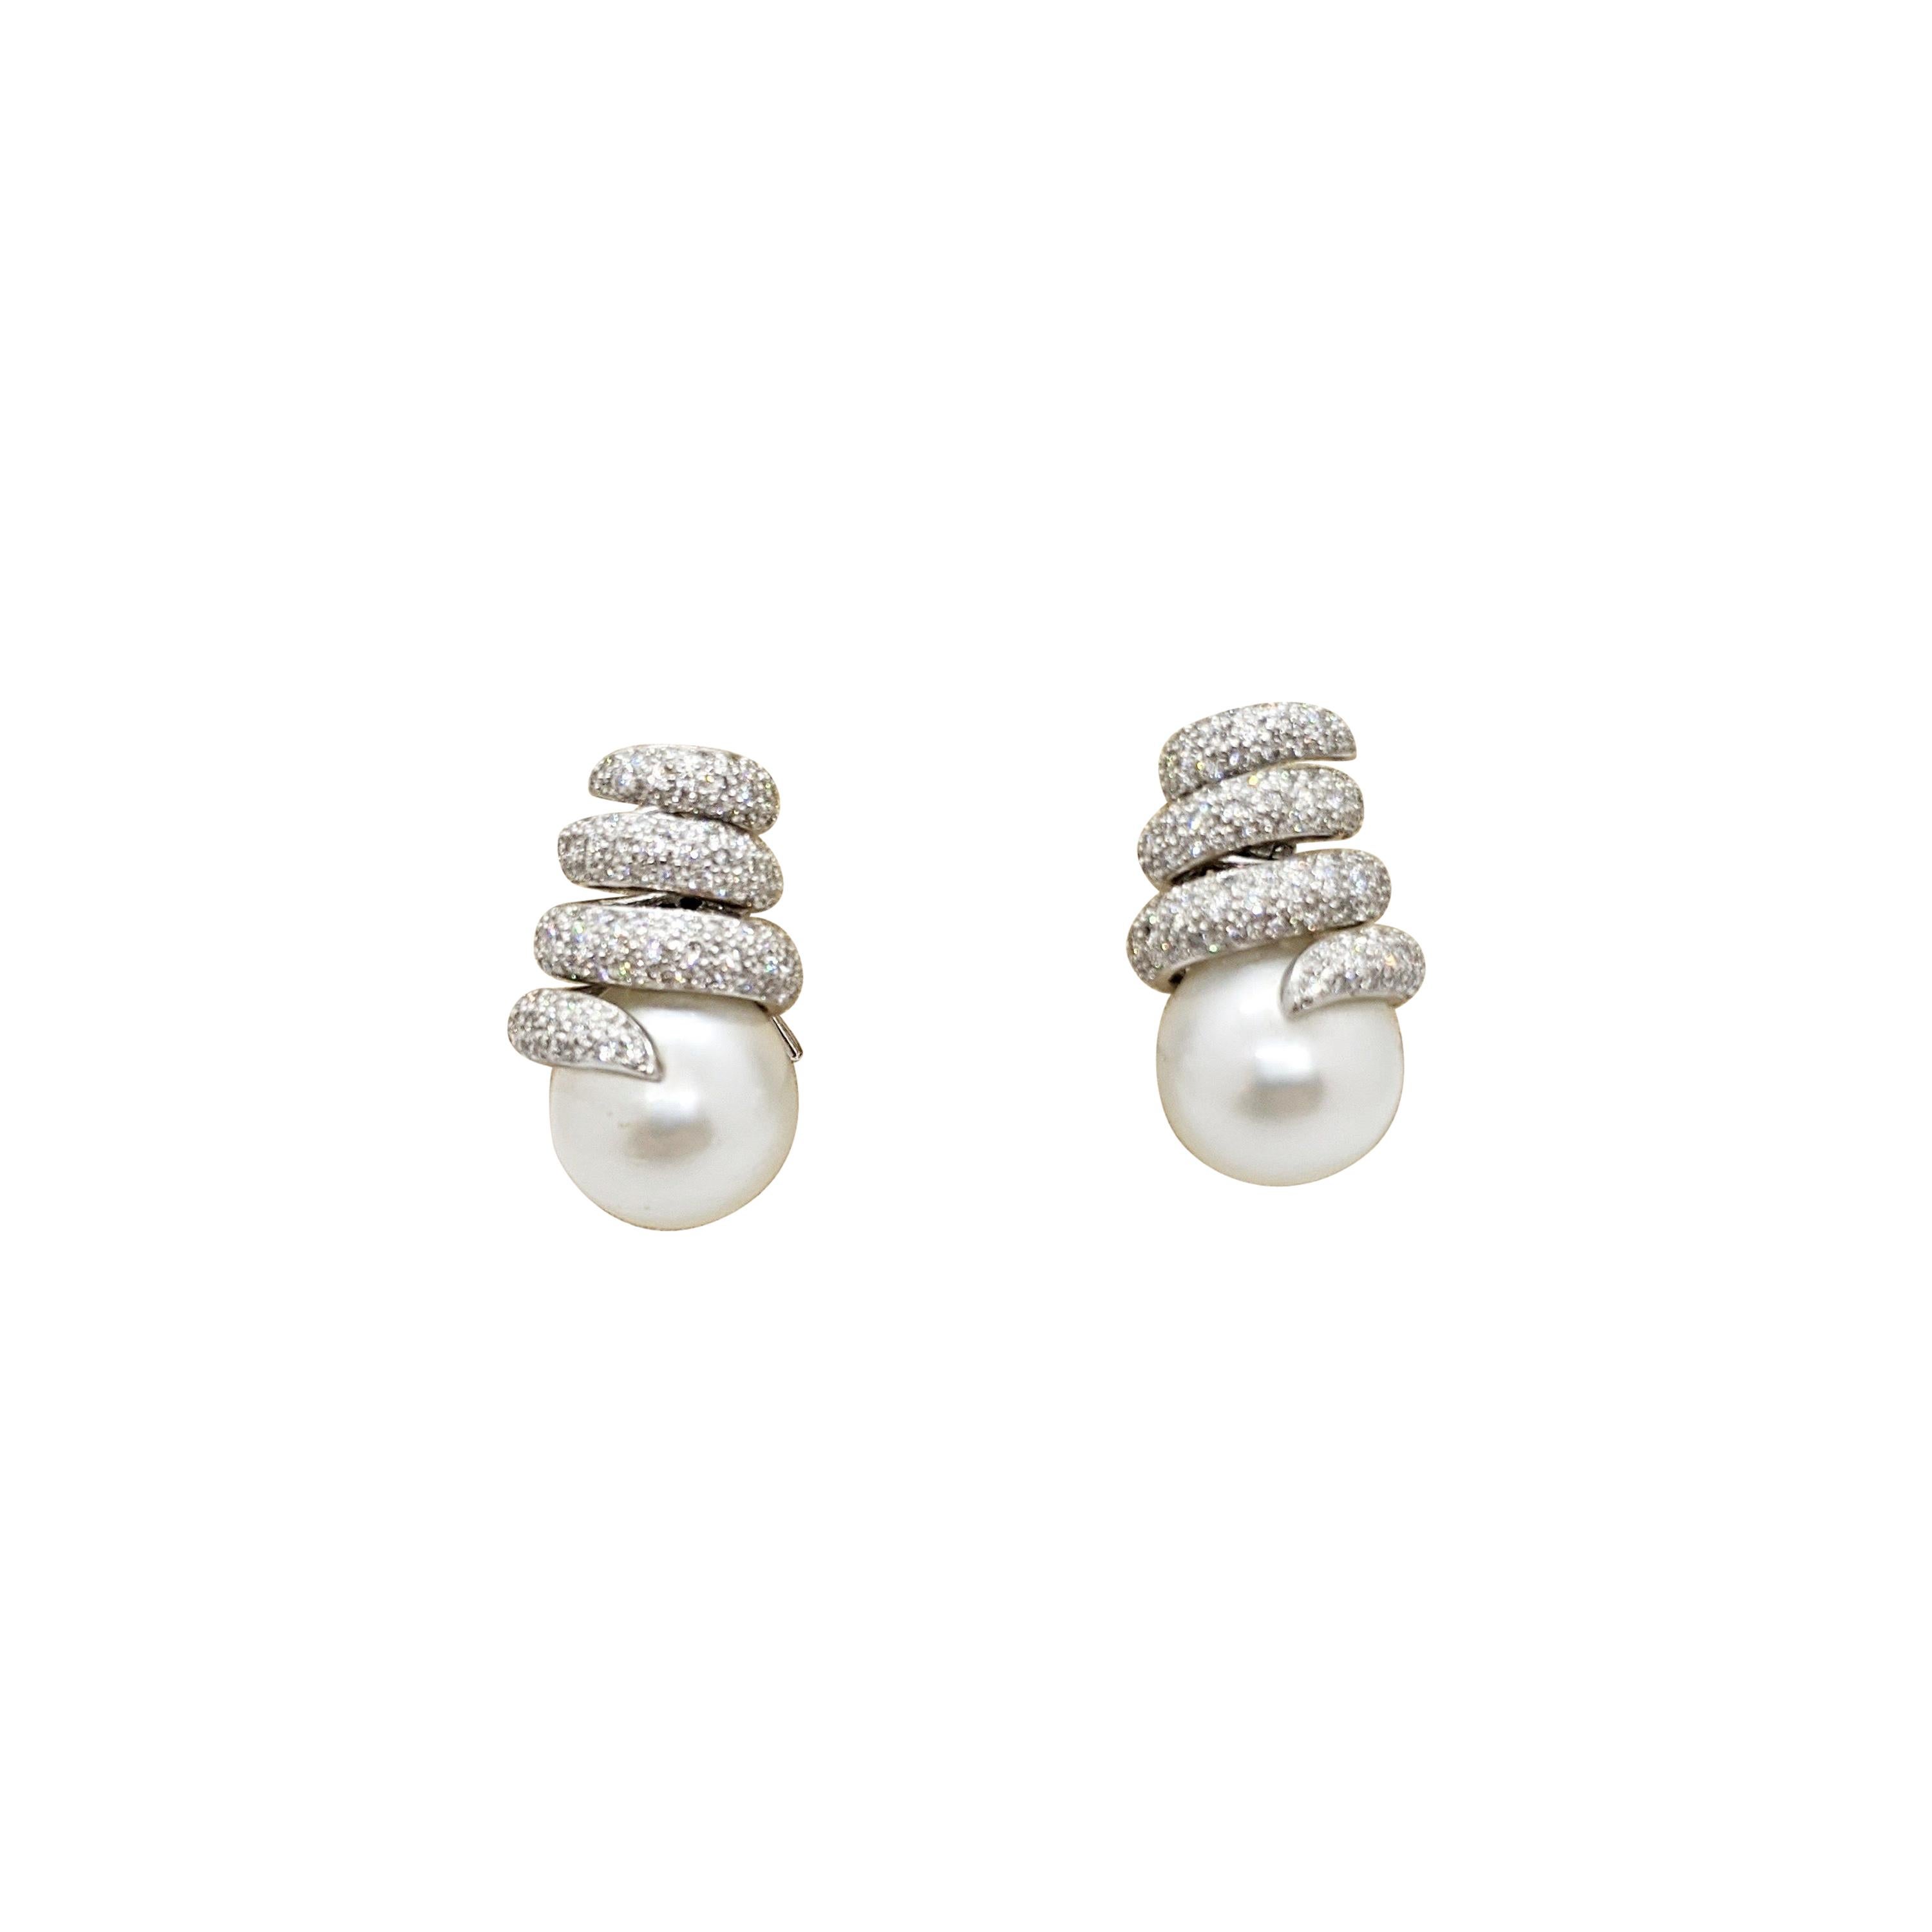 Cellini 18 Karat White Gold, 2.12 Carat Diamond and South Sea Pearls Earrings